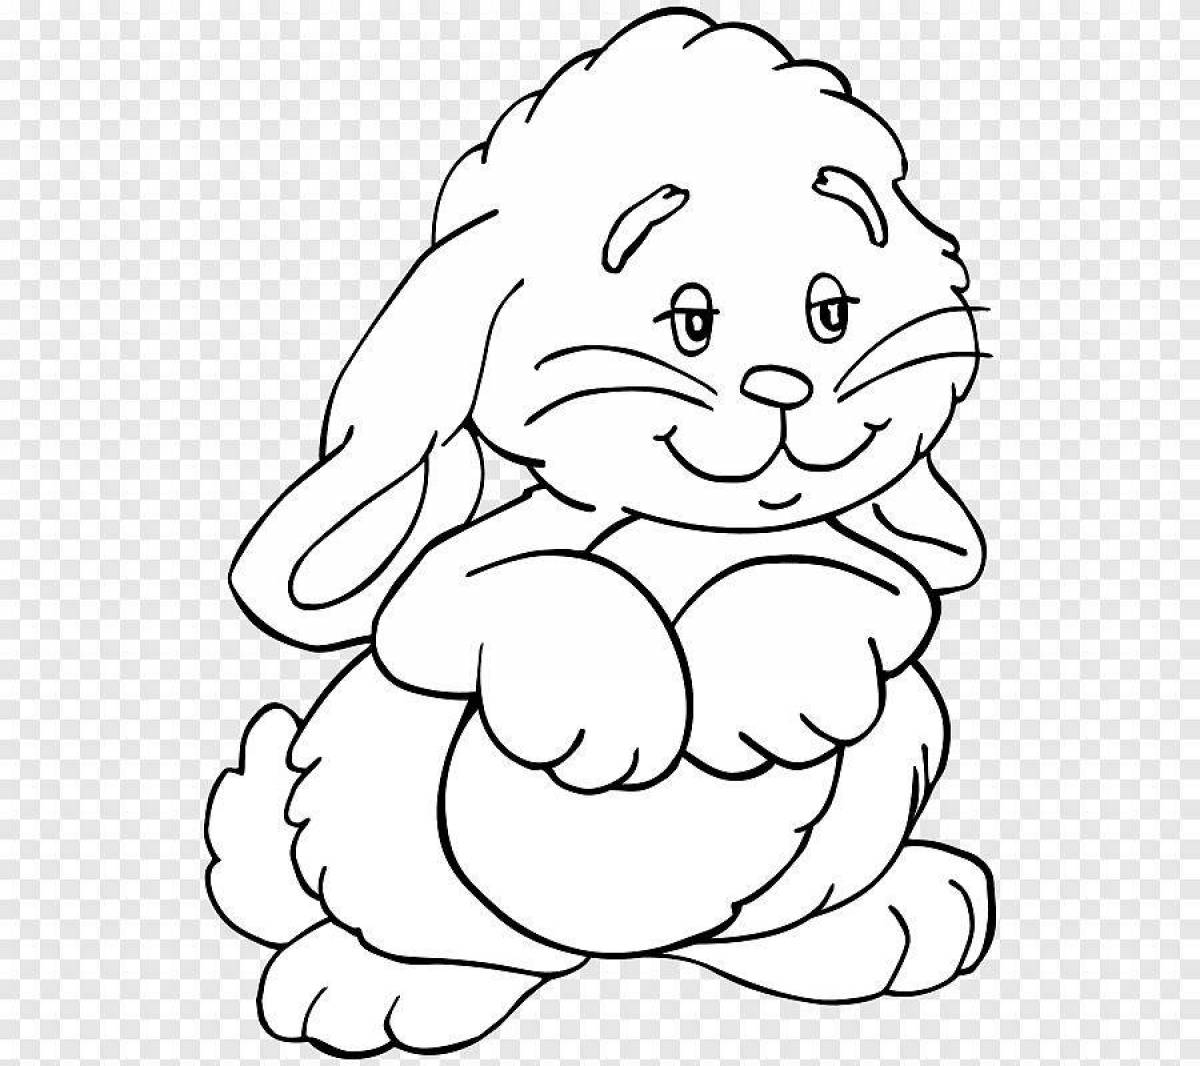 Floppy rabbit coloring for kids